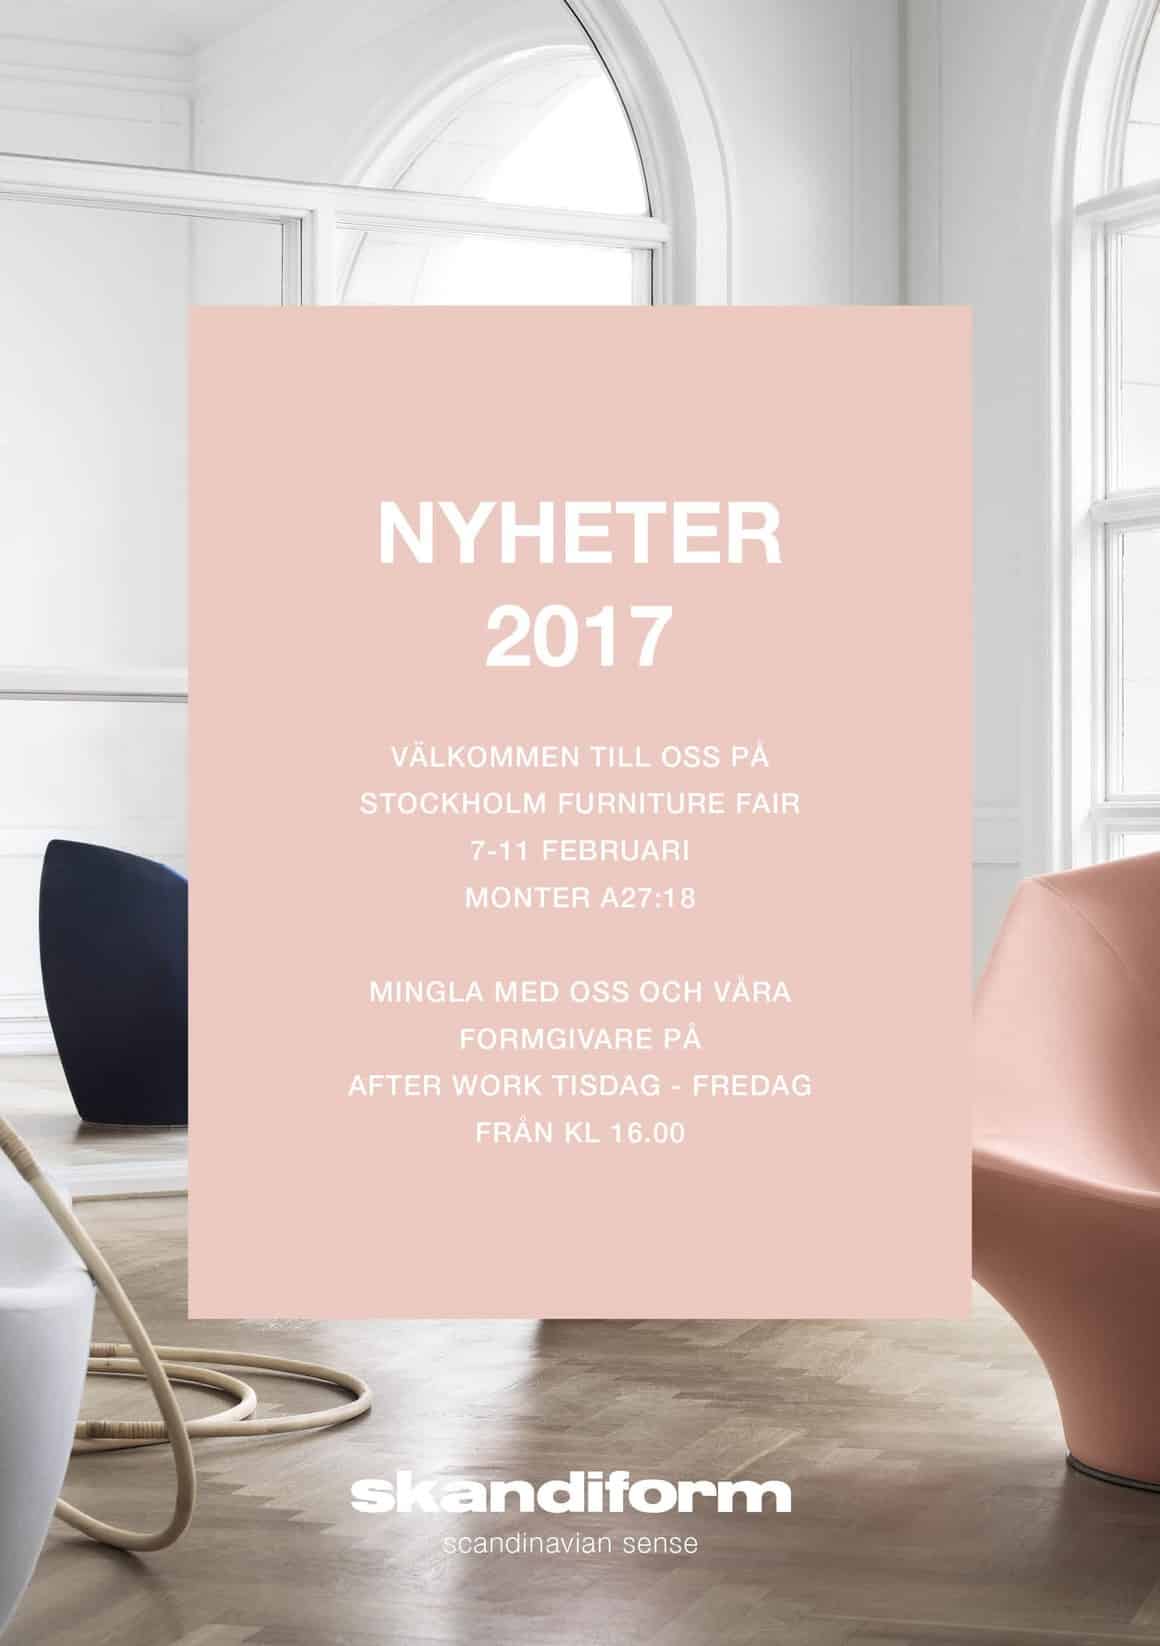 Skandiform @ Stockholm Furniture Fair